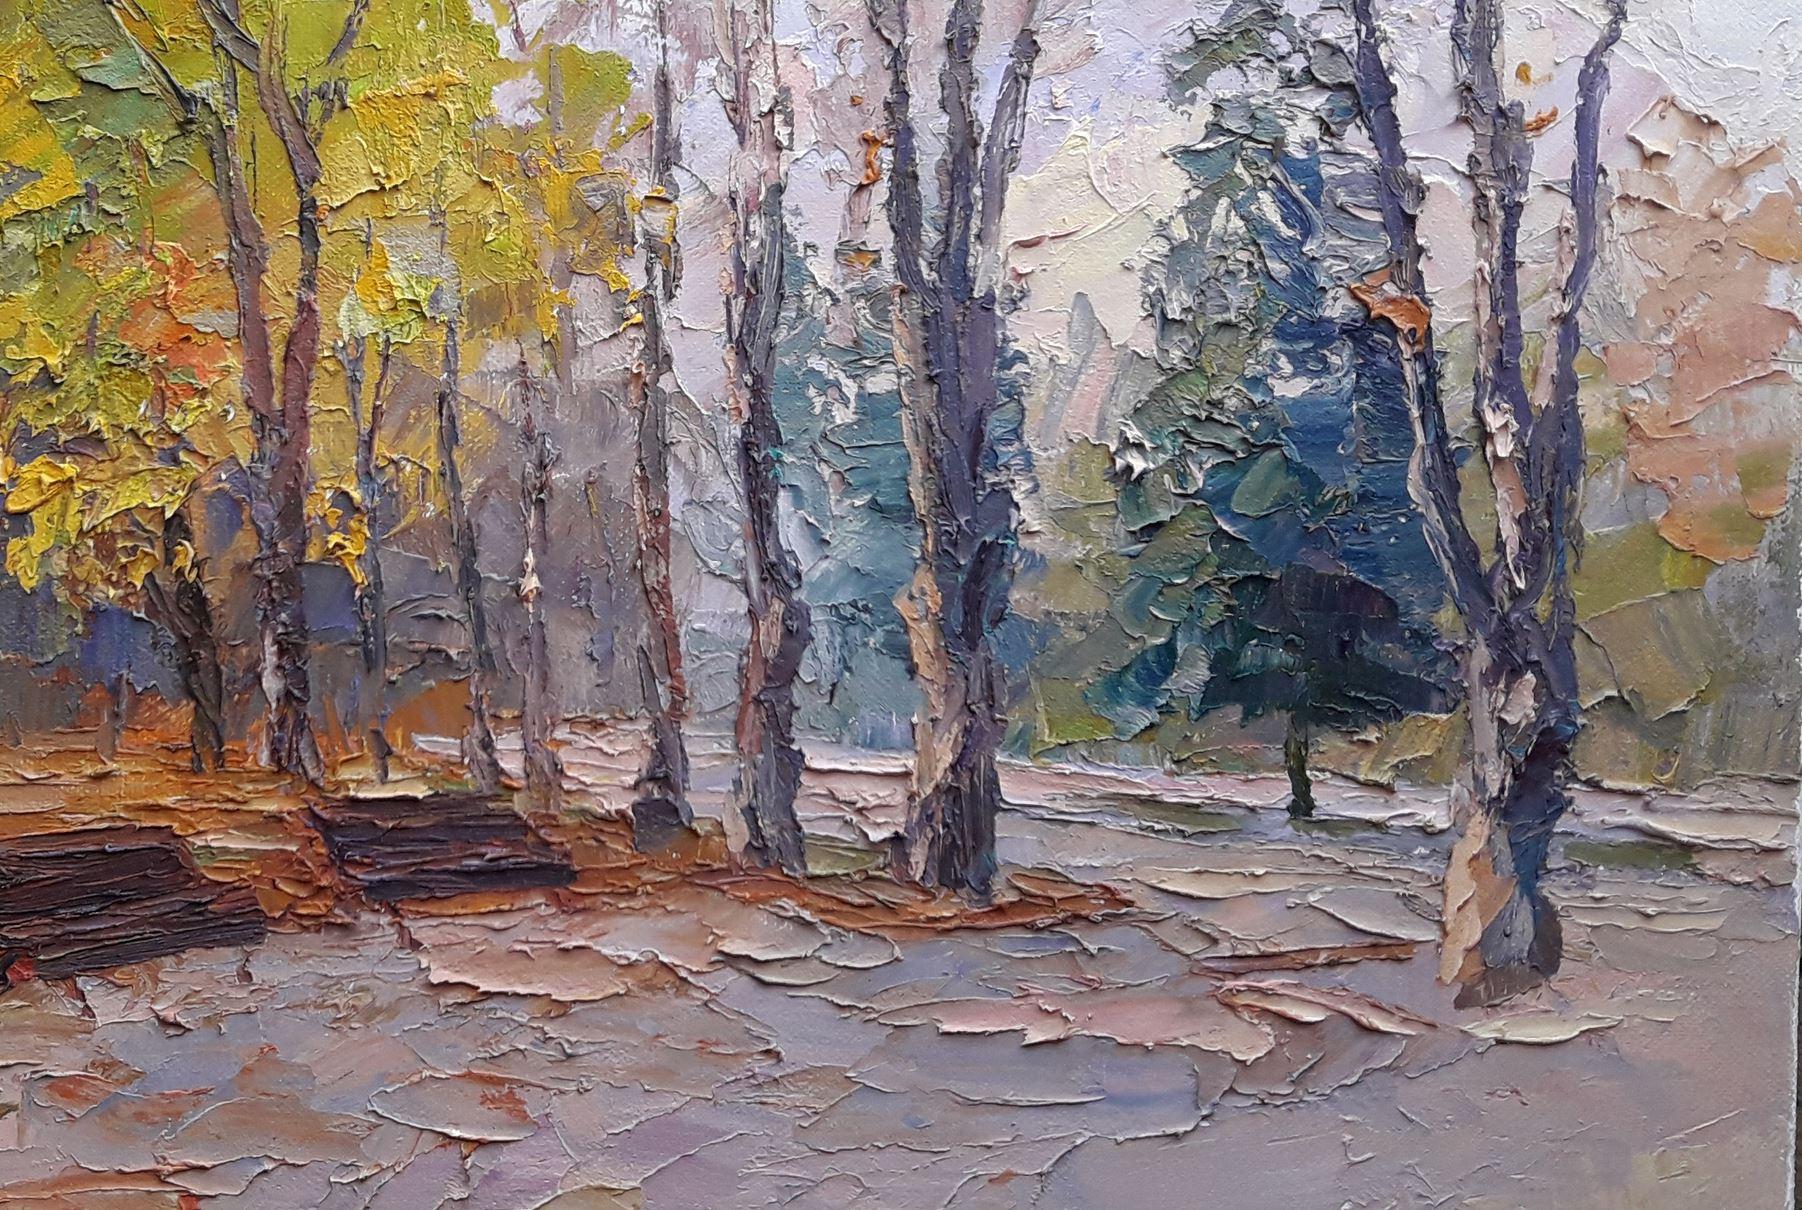 Artist: Boris Serdyuk 
Work: Original oil painting, handmade artwork, one of a kind 
Medium: Oil on Canvas
Style: Impressionism
Year: 2020
Title: In the autumn park
Size: 16.5